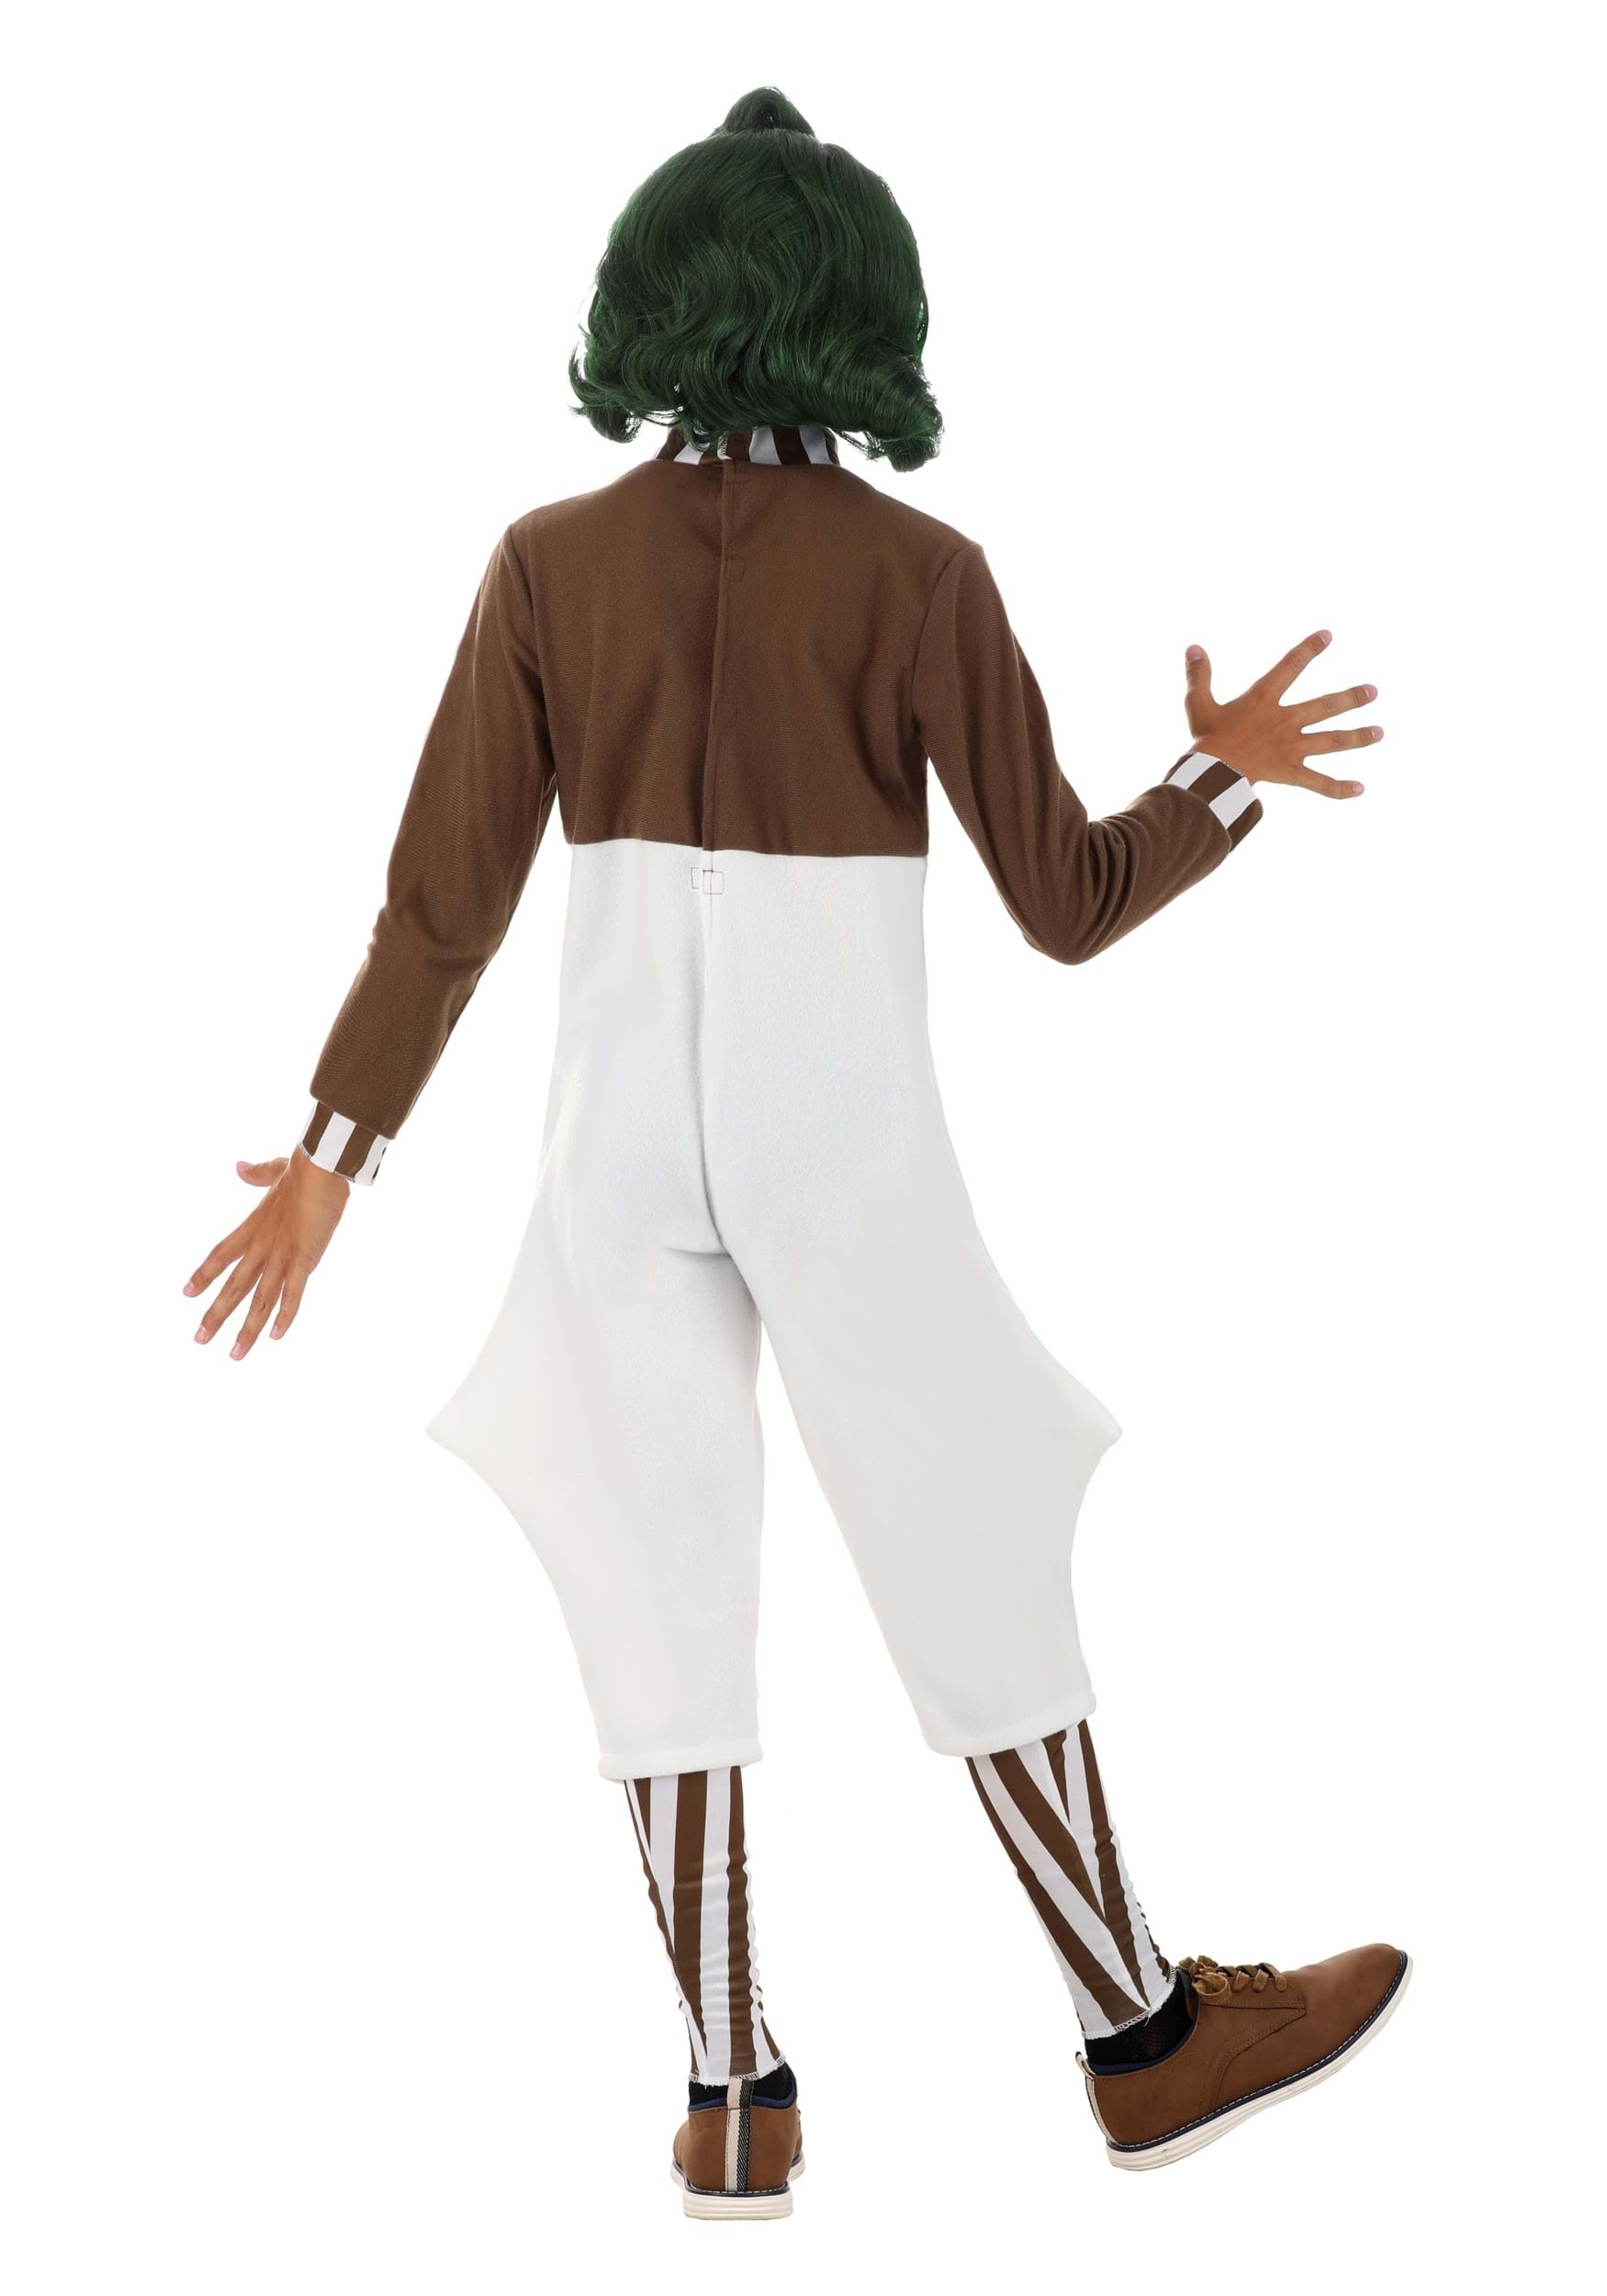 Child Willy Wonka Oompa Loompa Costume